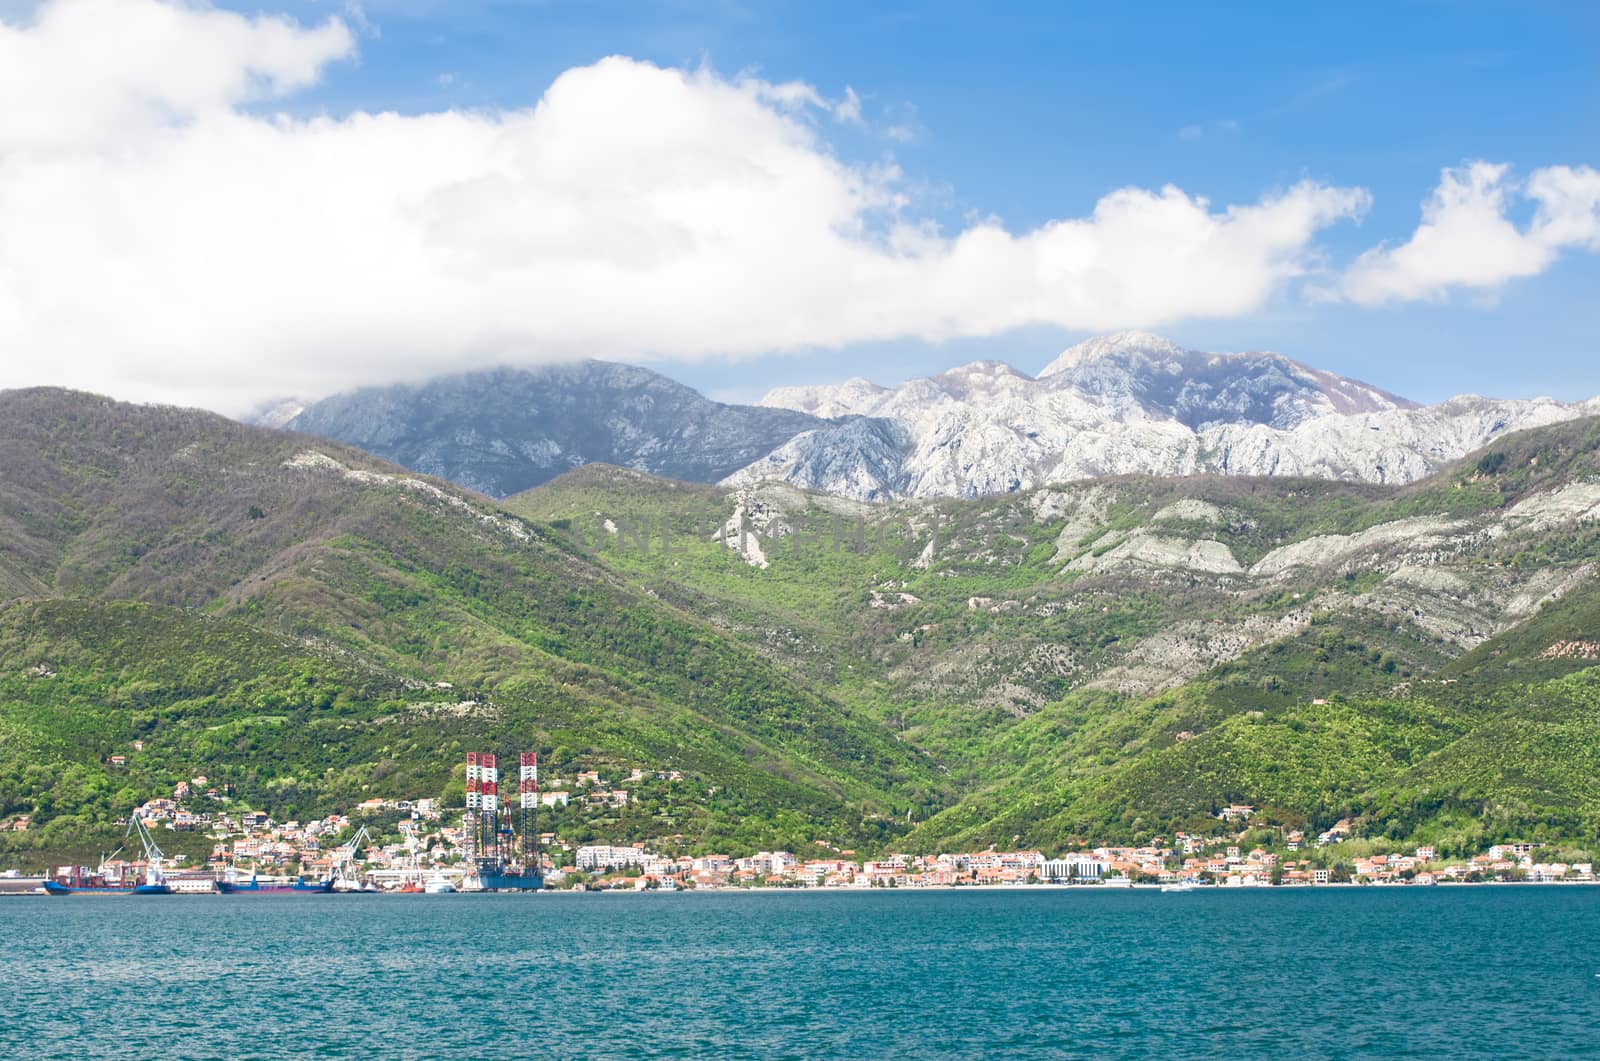 The Bay of Kotor view in spring by Garsya